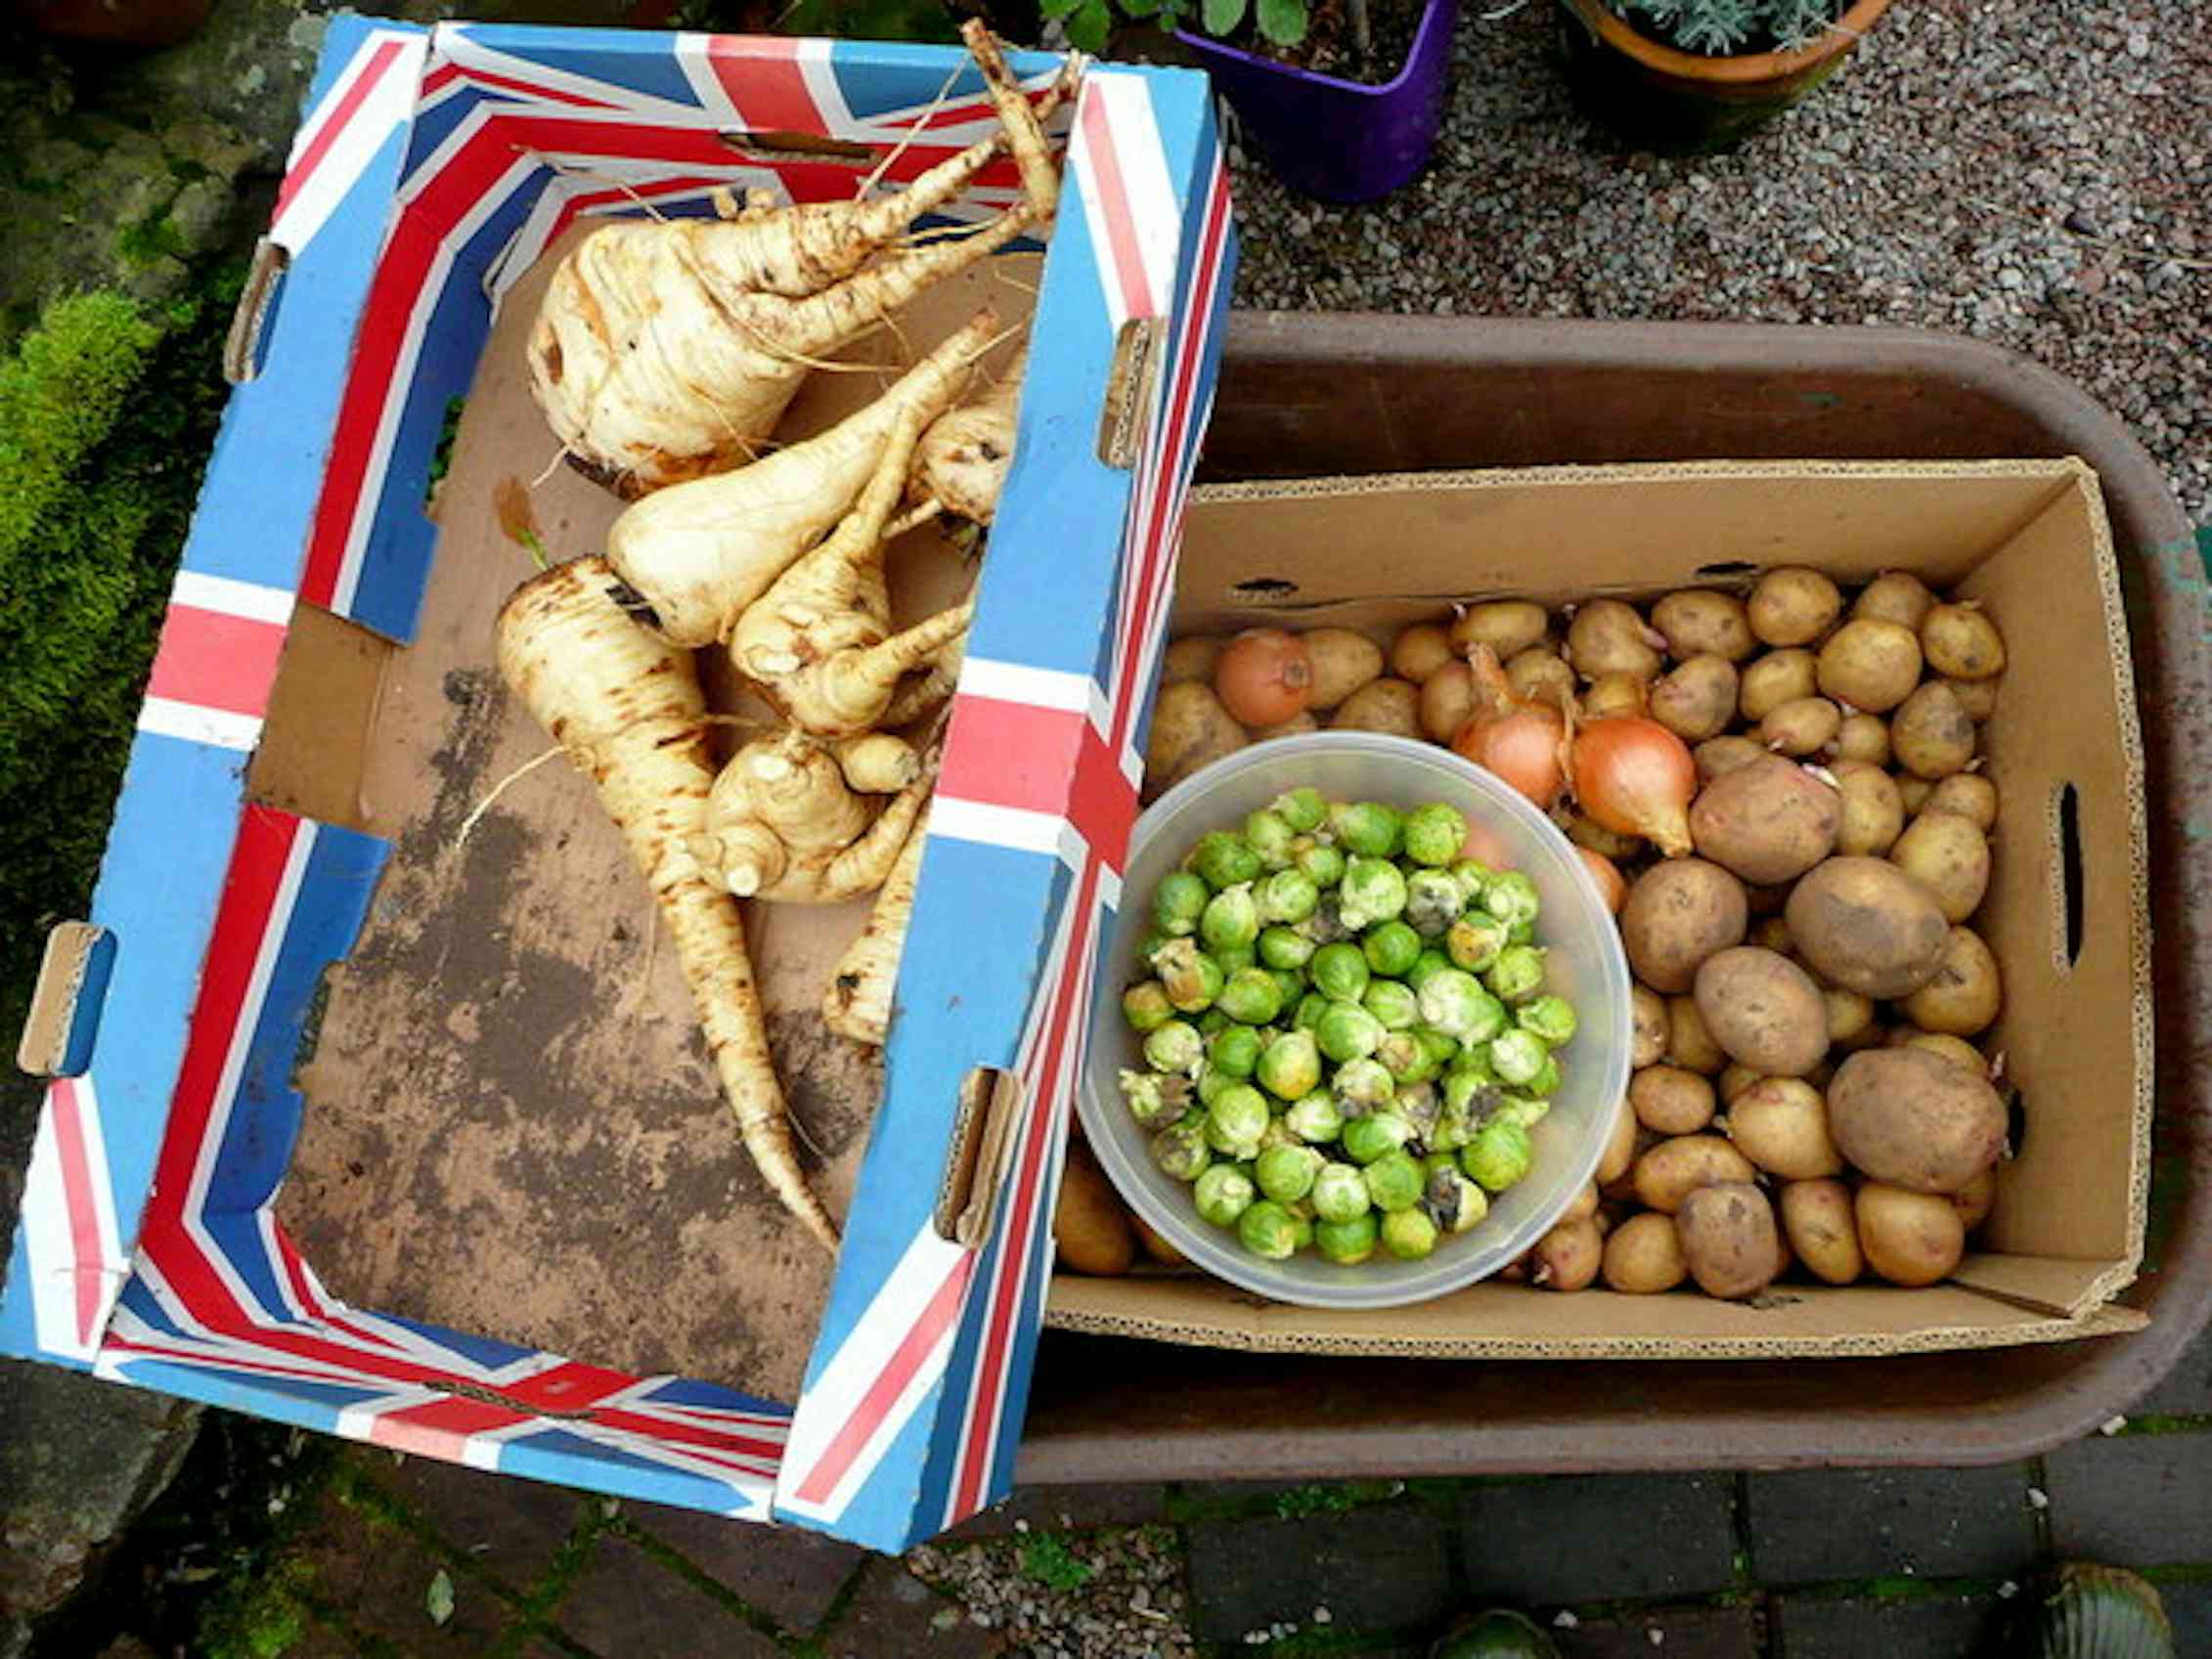 Root vegetables in cartons